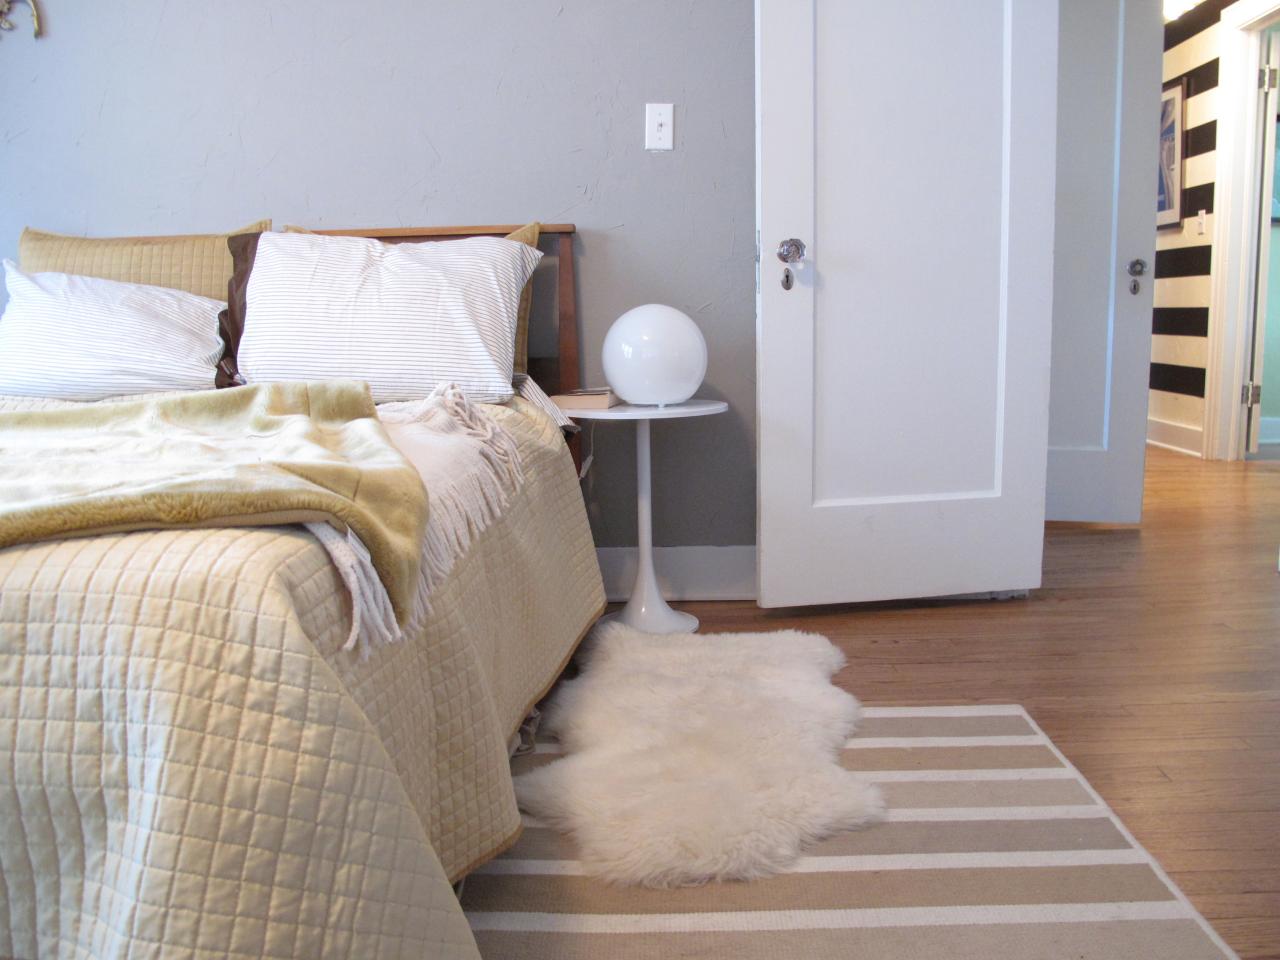 Bedroom Carpet Ideas Pictures, Options & Ideas HGTV